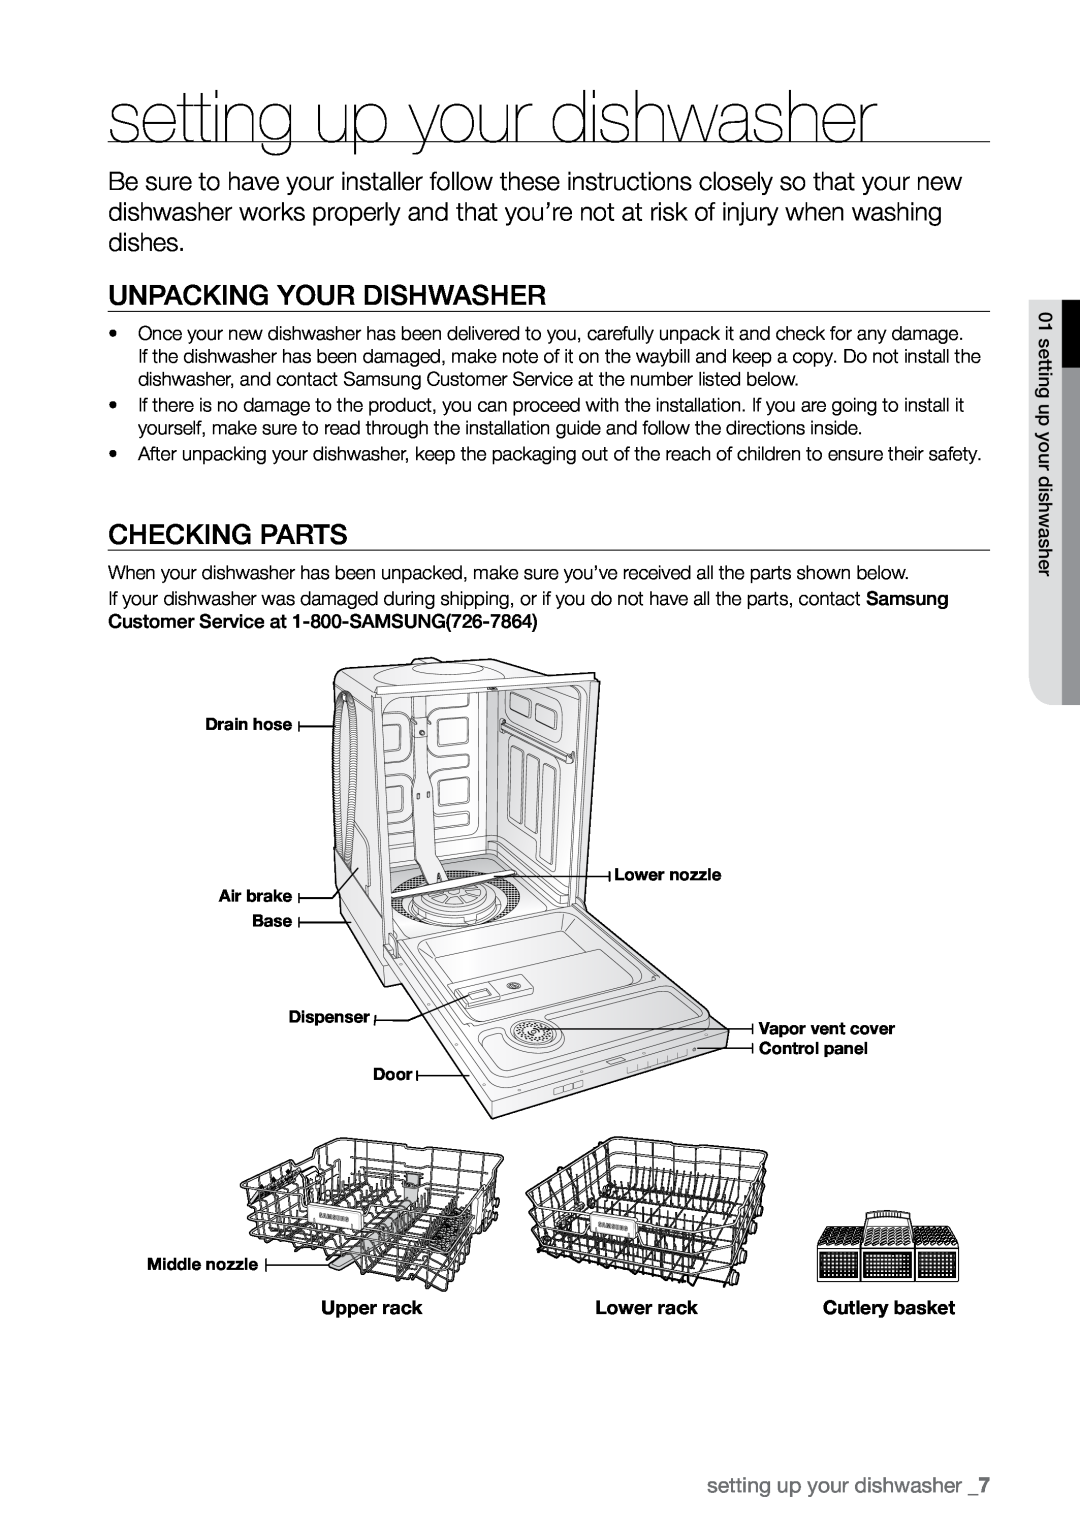 Samsung DMR78 manual Unpacking your dishwasher, Checking parts, setting up your dishwasher , Upper rack, Lower rack 